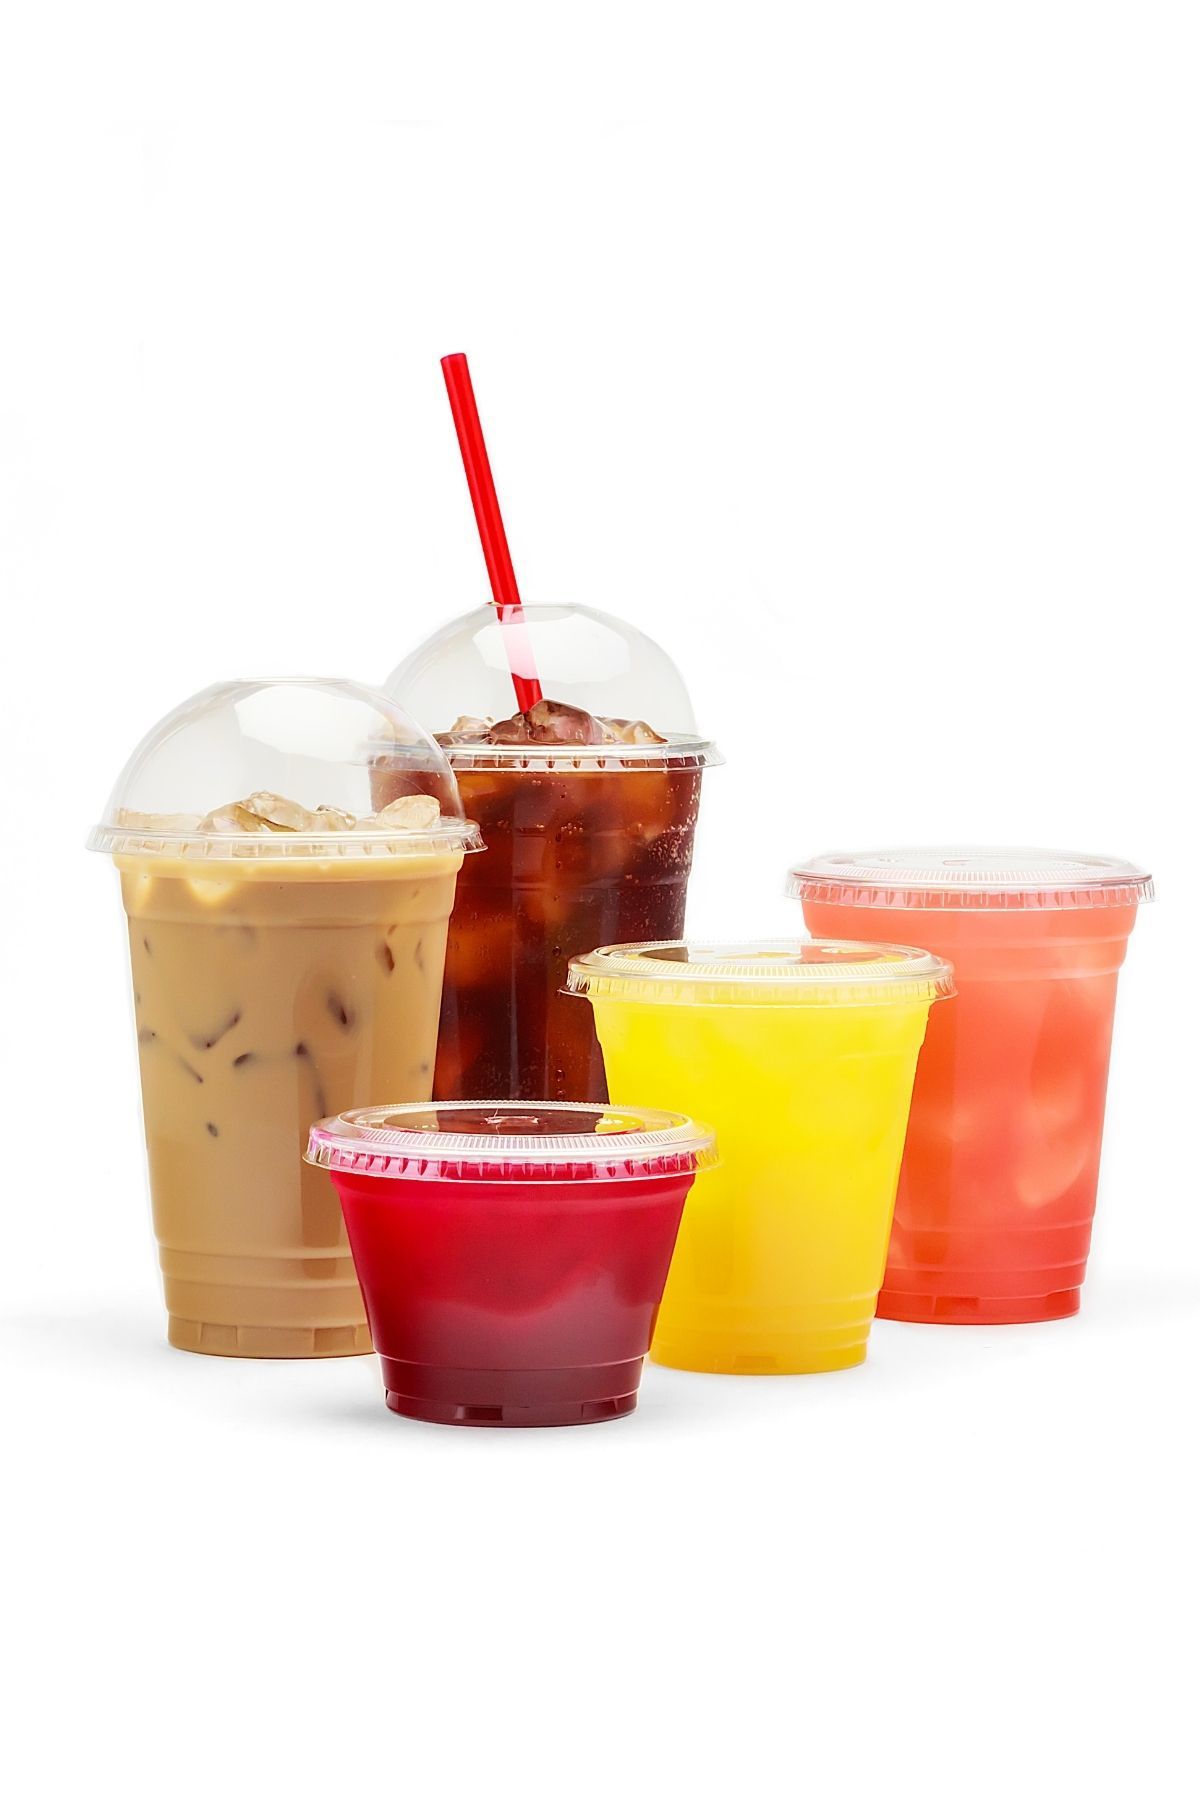 16 oz. Crystal Clear Plastic Disposable Tall Iced Tea Cups